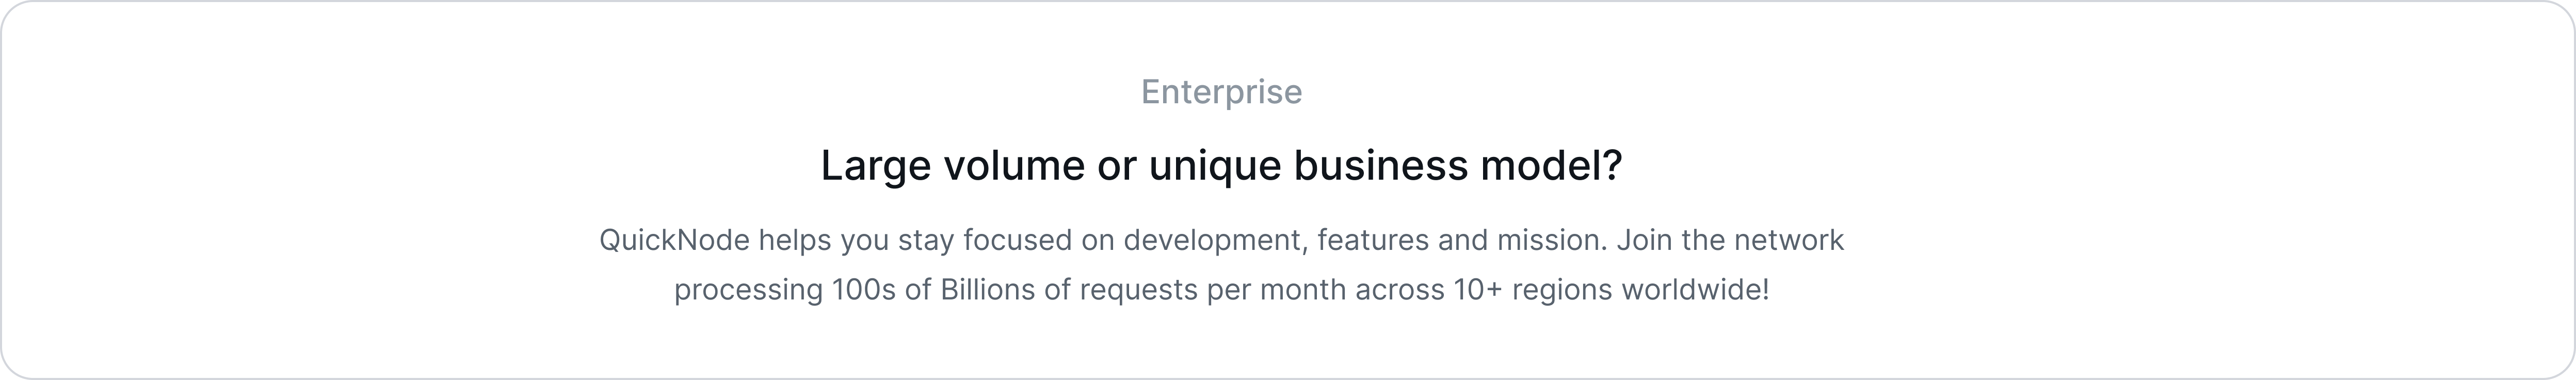 QuickNode Enterprise — Large volume or unique business model?